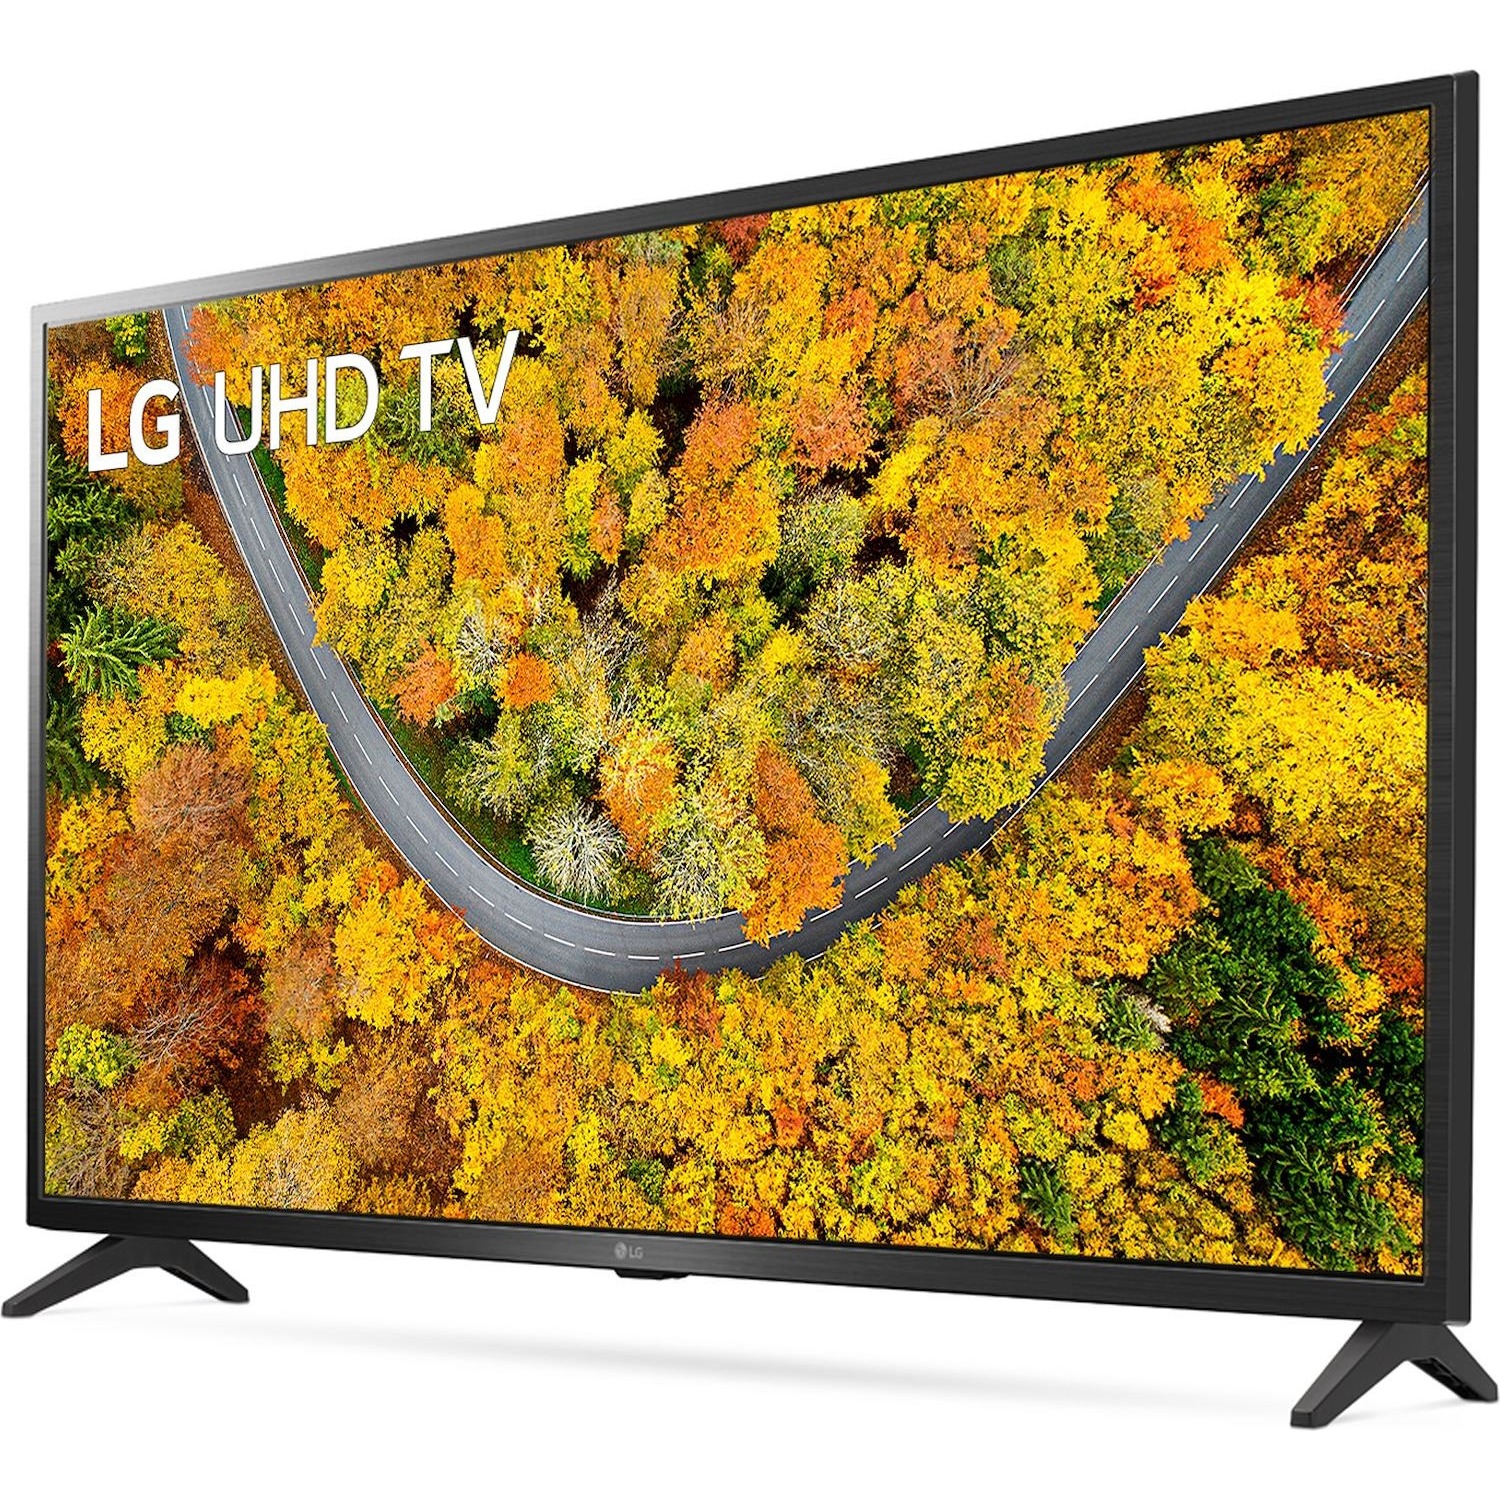 Immagine per TV LED Smart 4K UHD LG 43UP75006 da DIMOStore